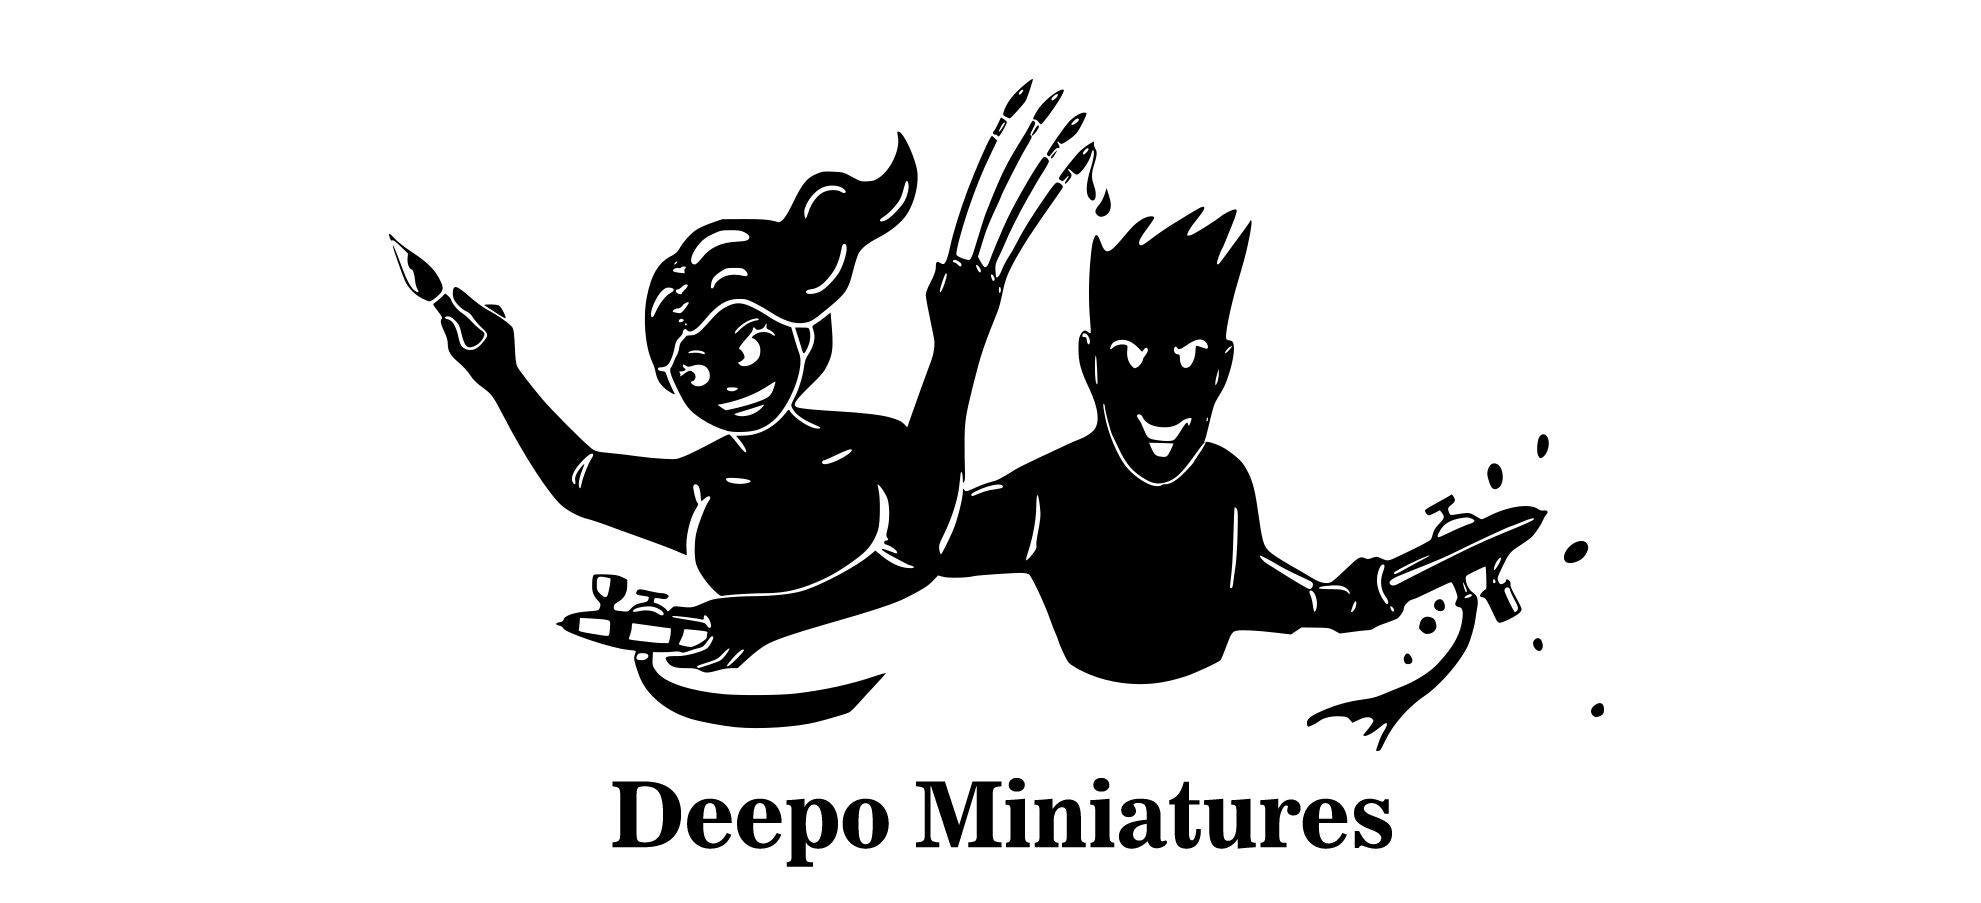 Deepo Miniatures